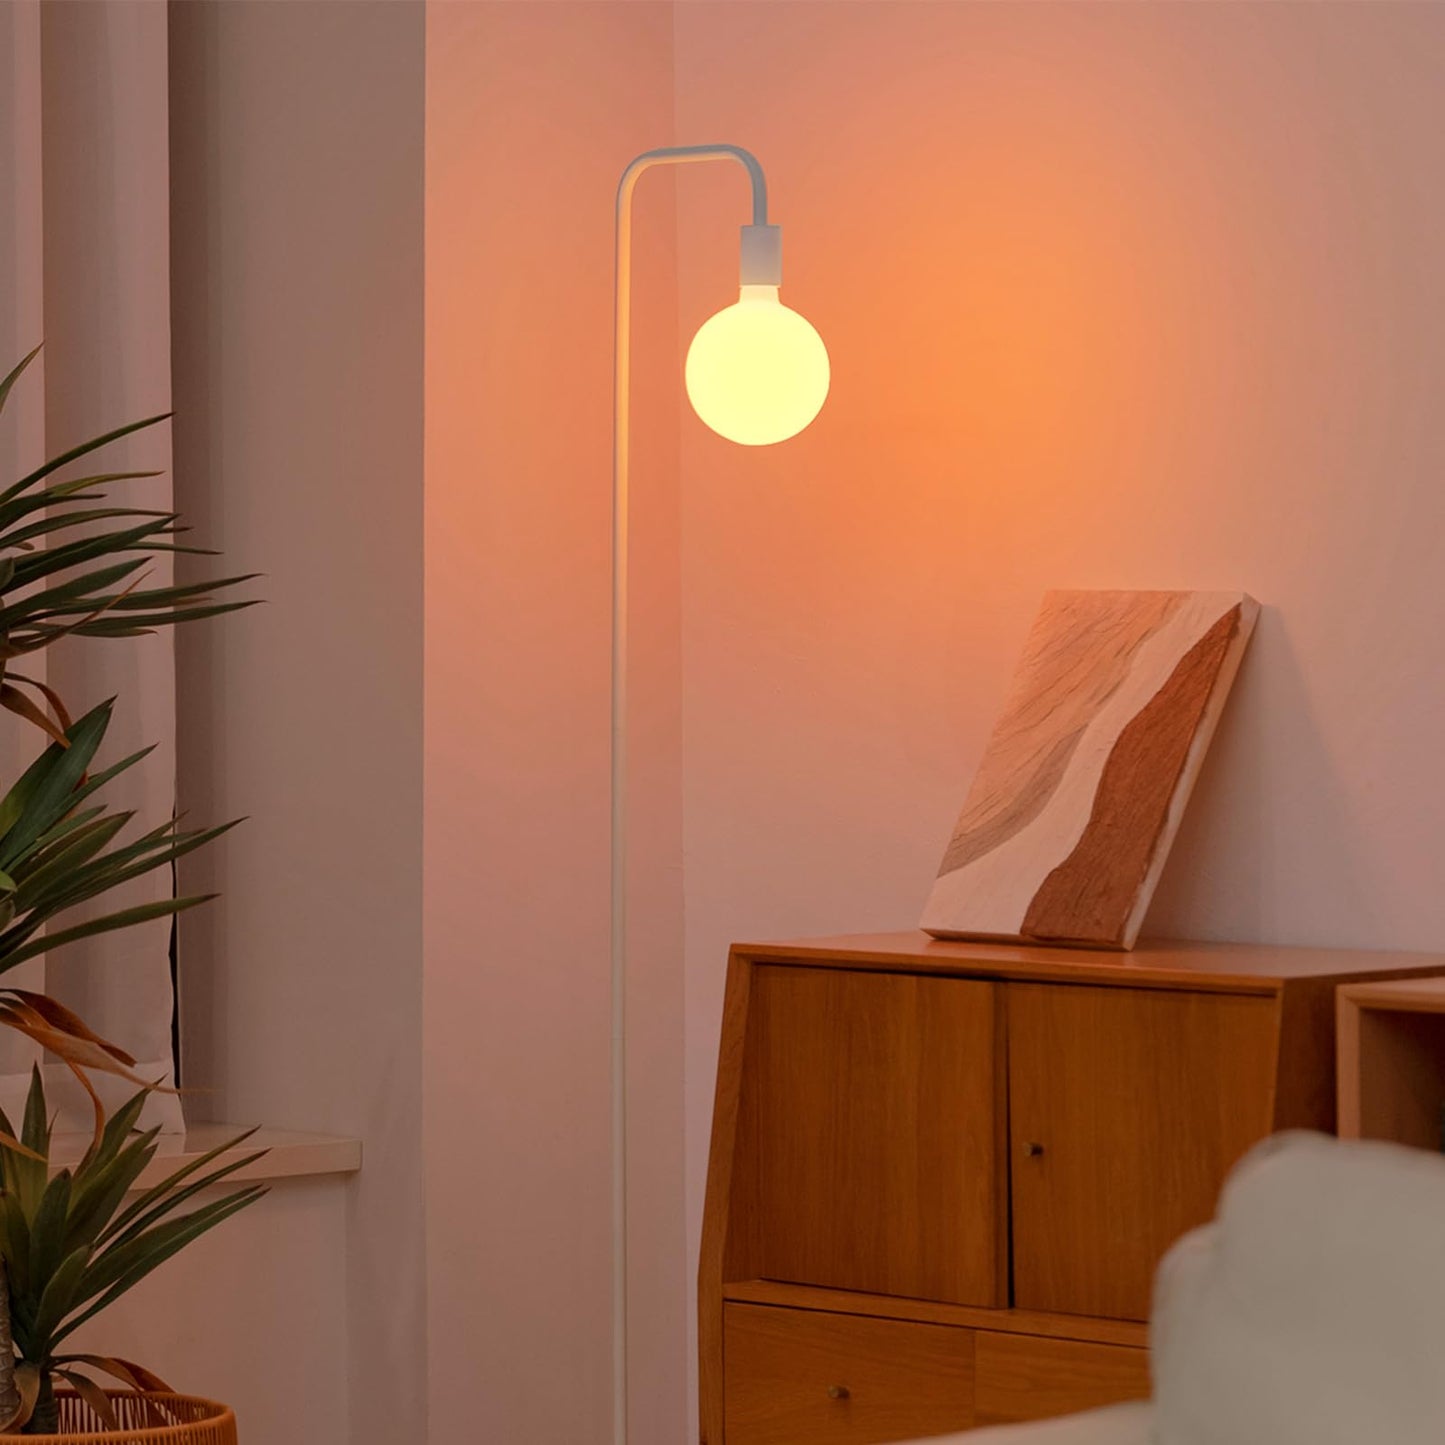 ONEWISH Floor Lamp For Living Room With Led Buld Warm Matt White